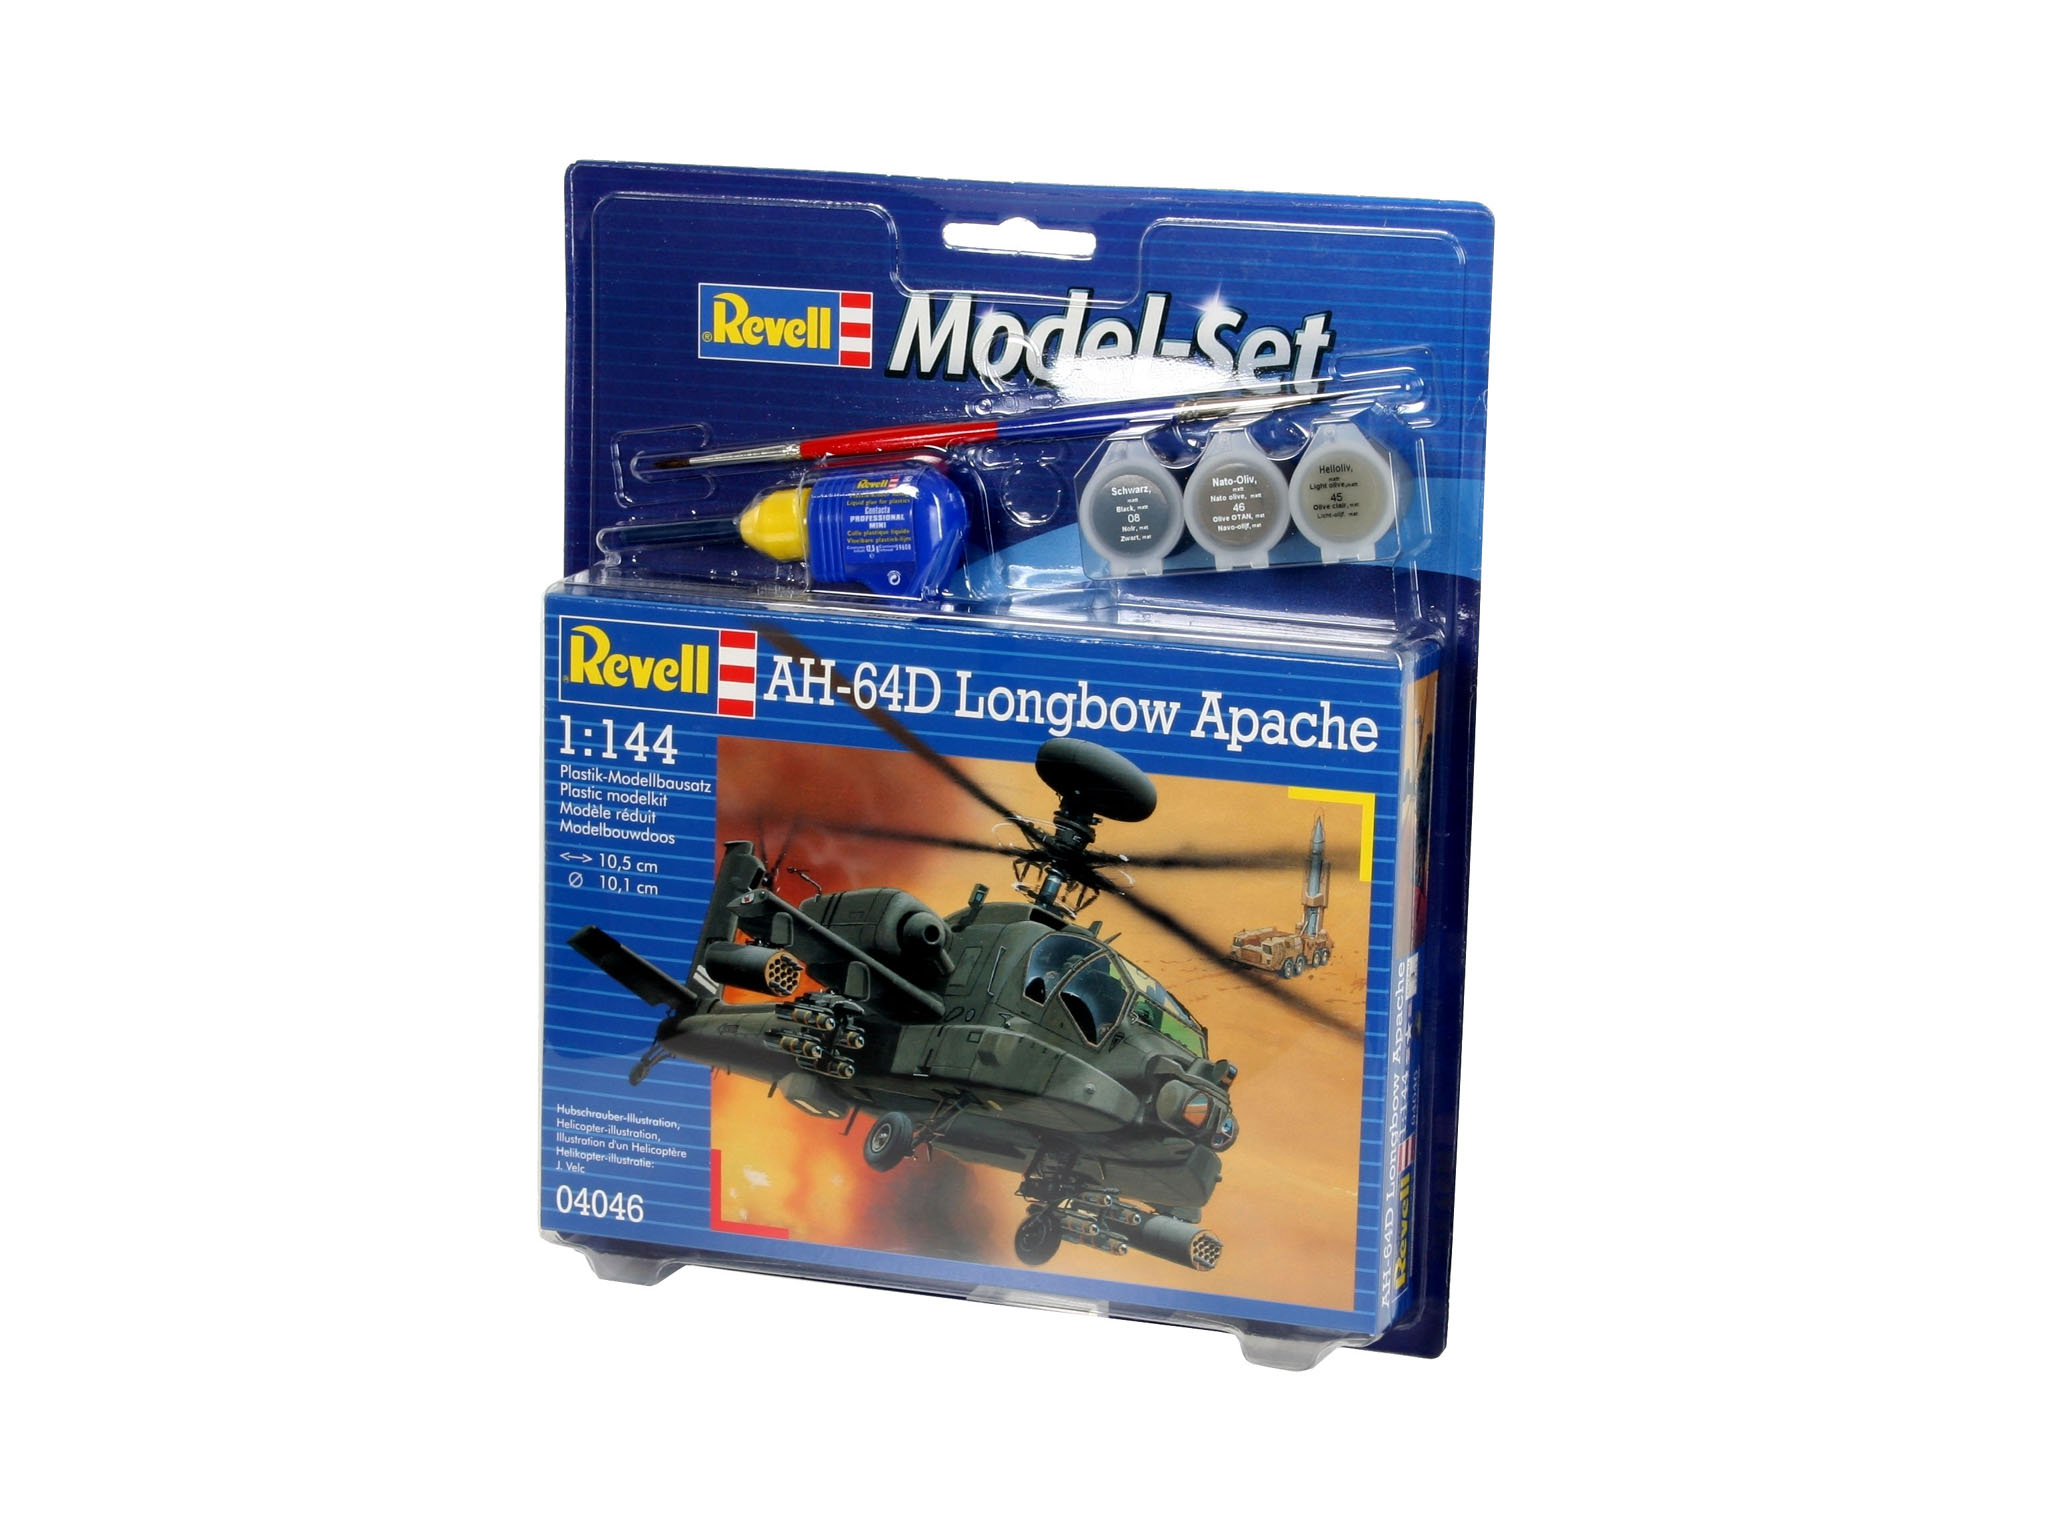 Model Set AH-64D Lon - Model Set AH-64D Longbow Apache